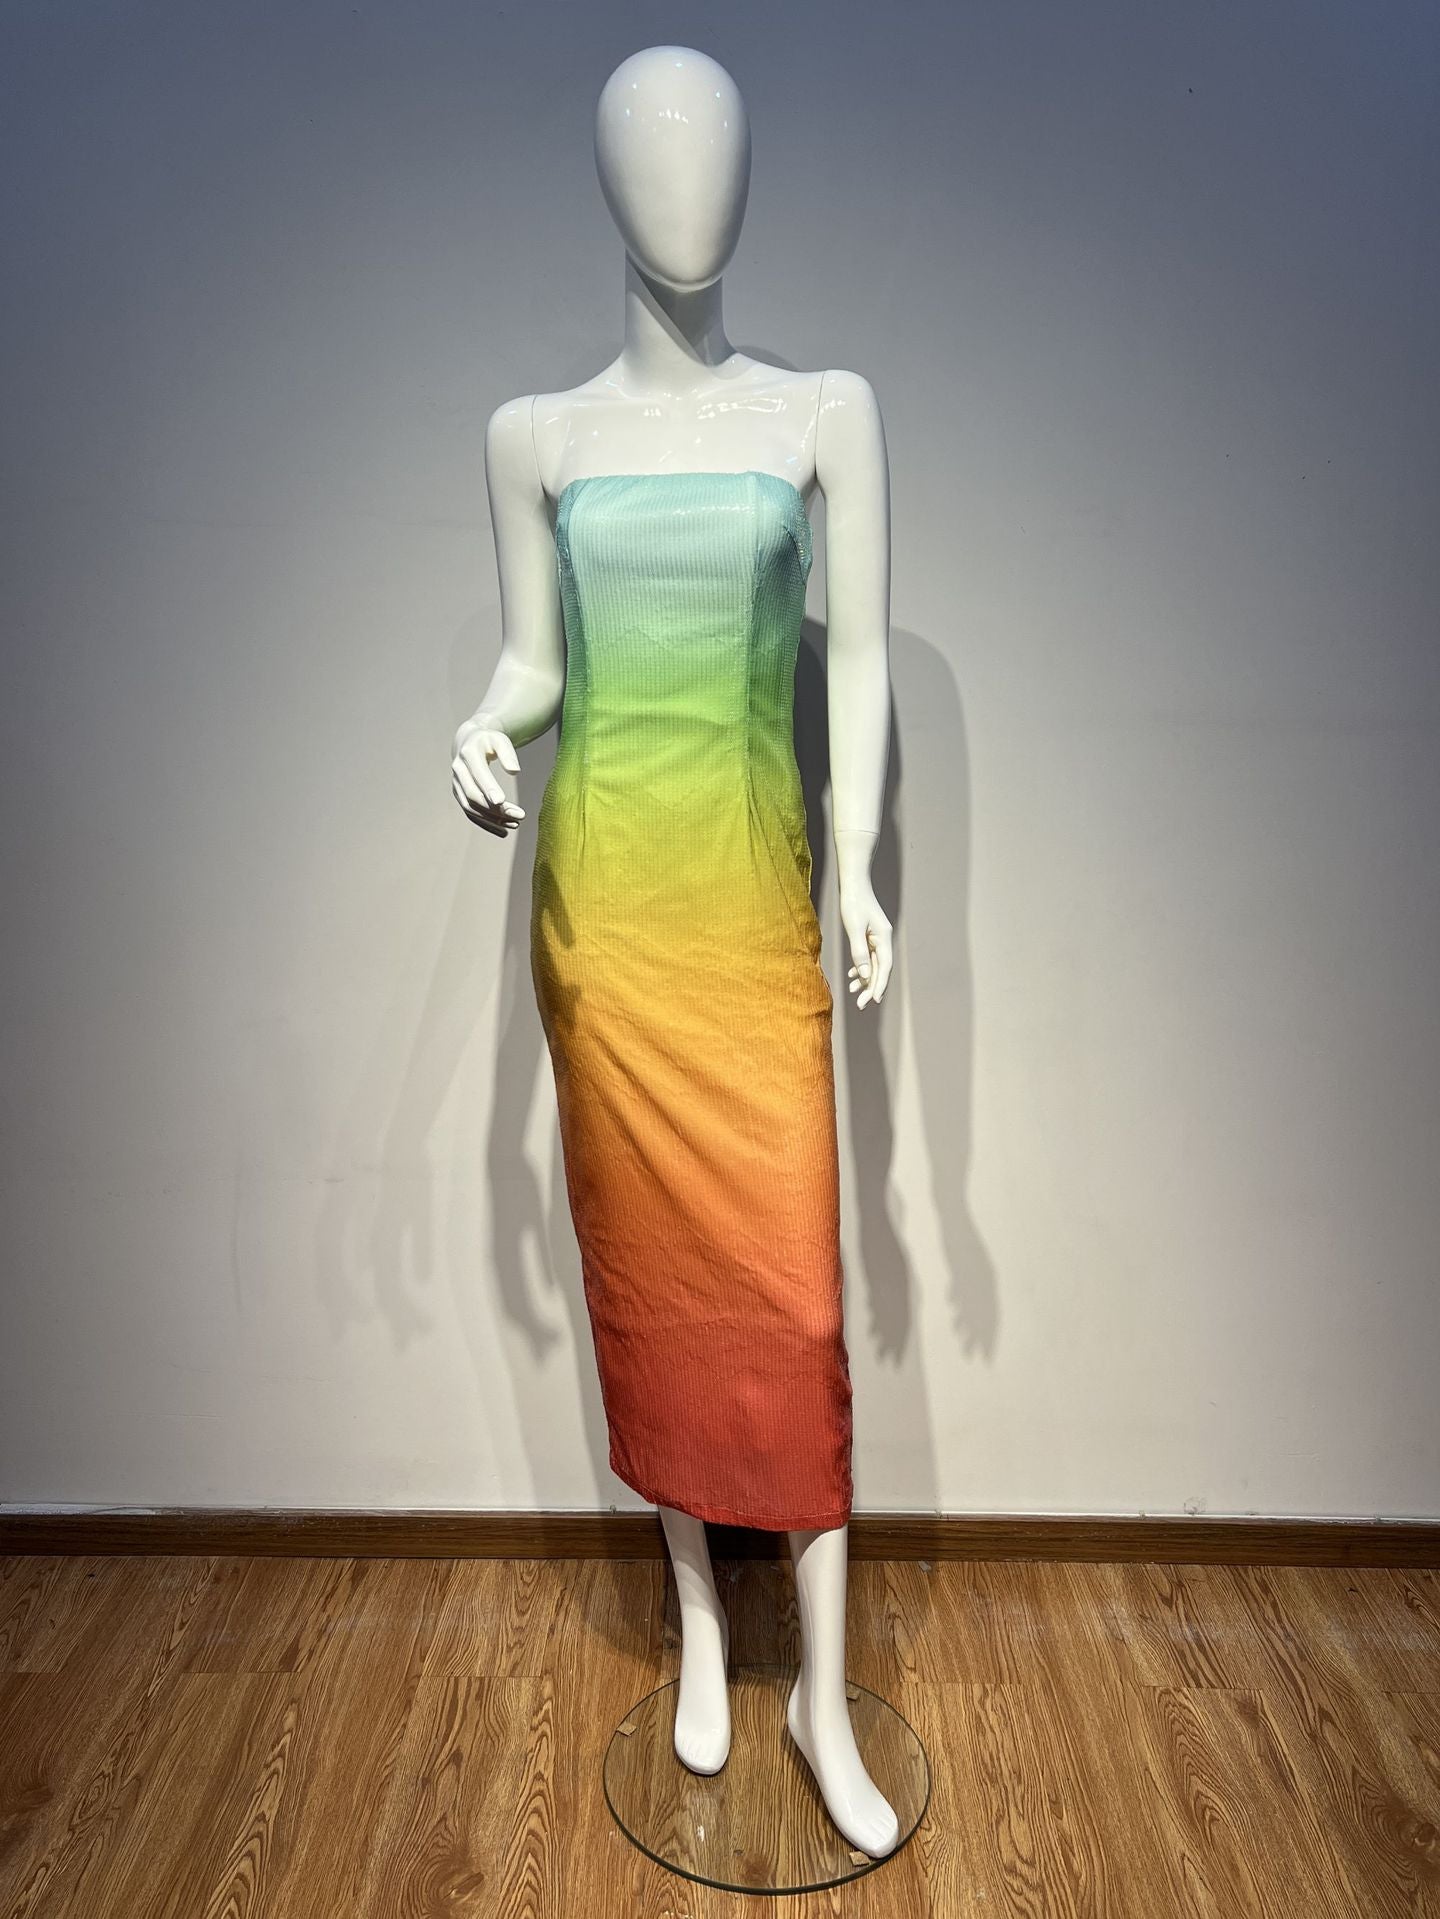 VAKKV  New Tube Top Rainbow Gradient Sequins Dating Travel Photography Graduation Season Dress Ladies' Evening Dress